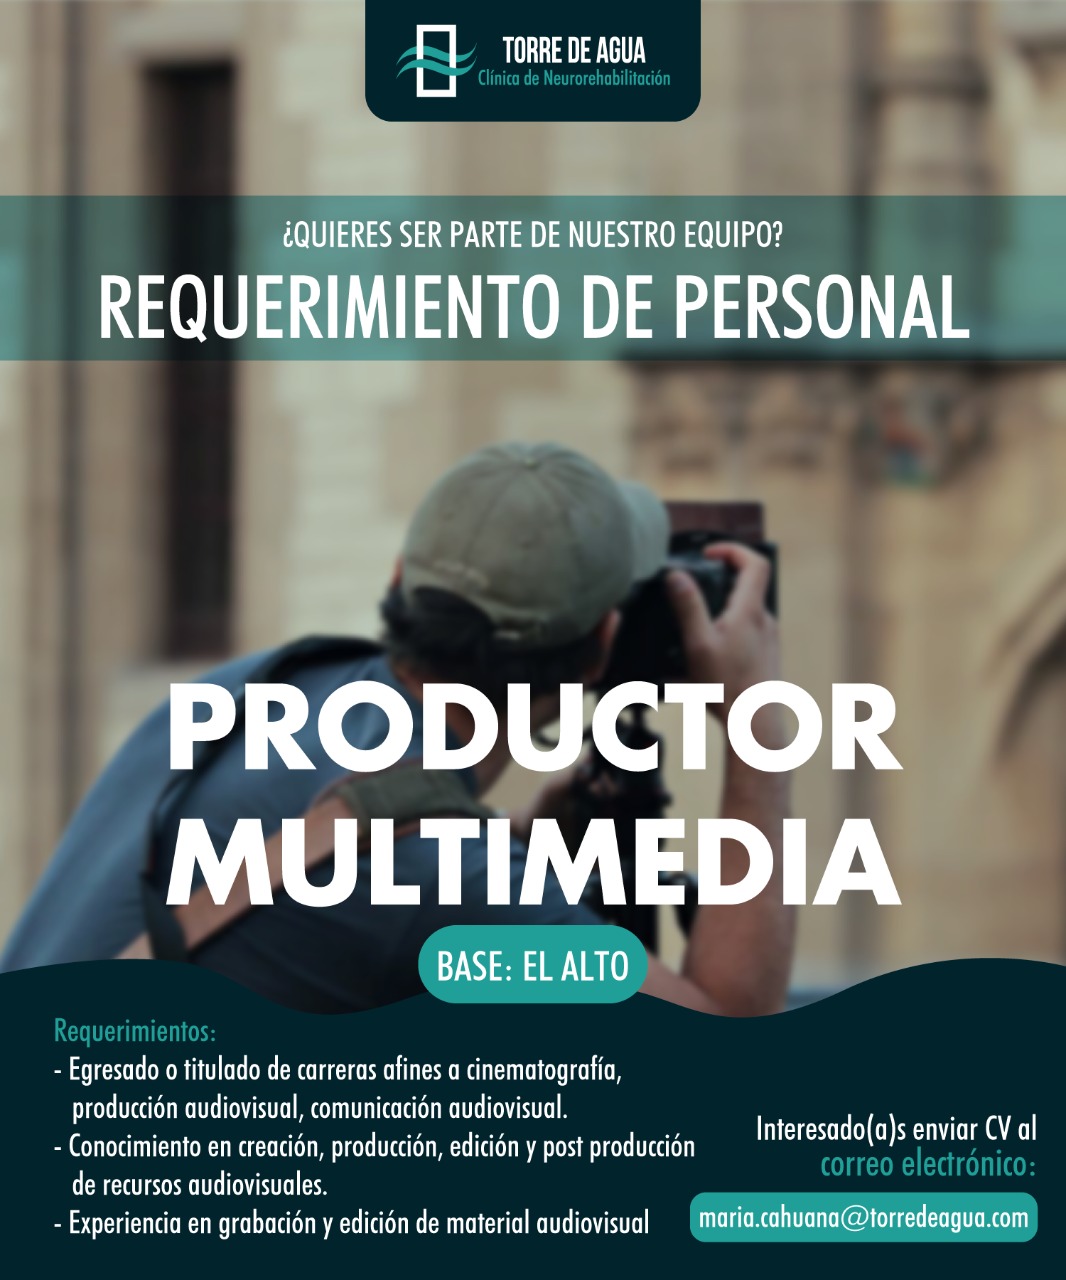 Productor Multimedia